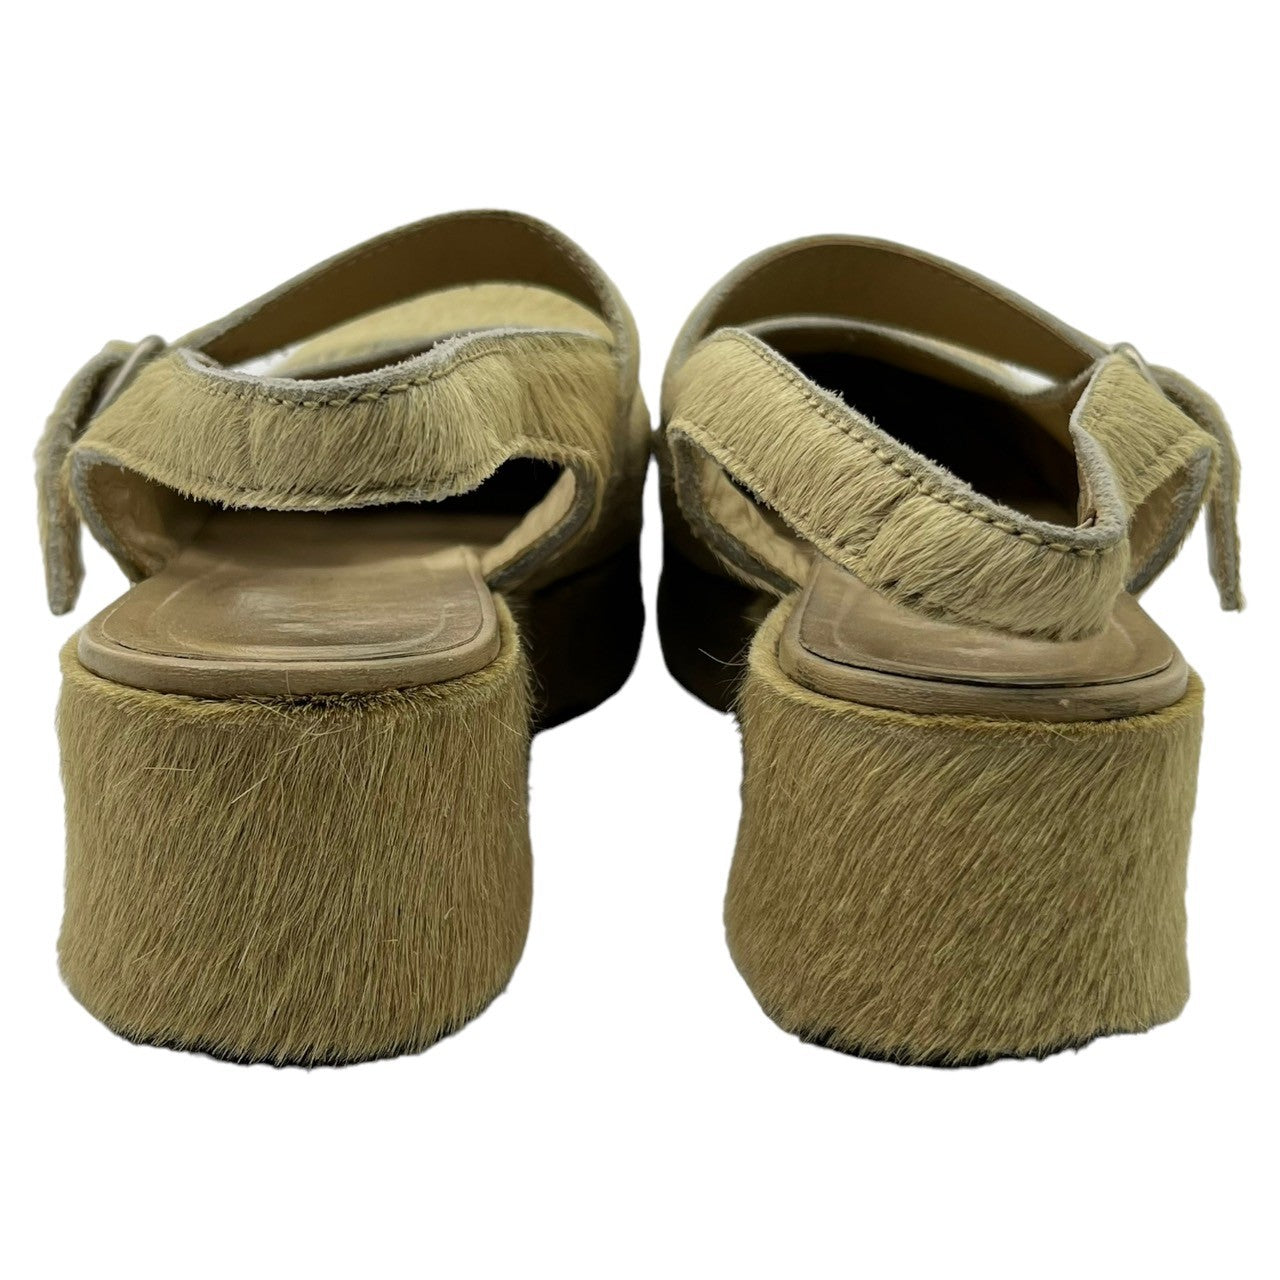 tricot COMME des GARCONS(トリココムデギャルソン) Harako sabo sandals ハラコ サボ サンダル SIZE 25.0程度(メンズ着用可能) アイボリー スレ、使用感、キズ有